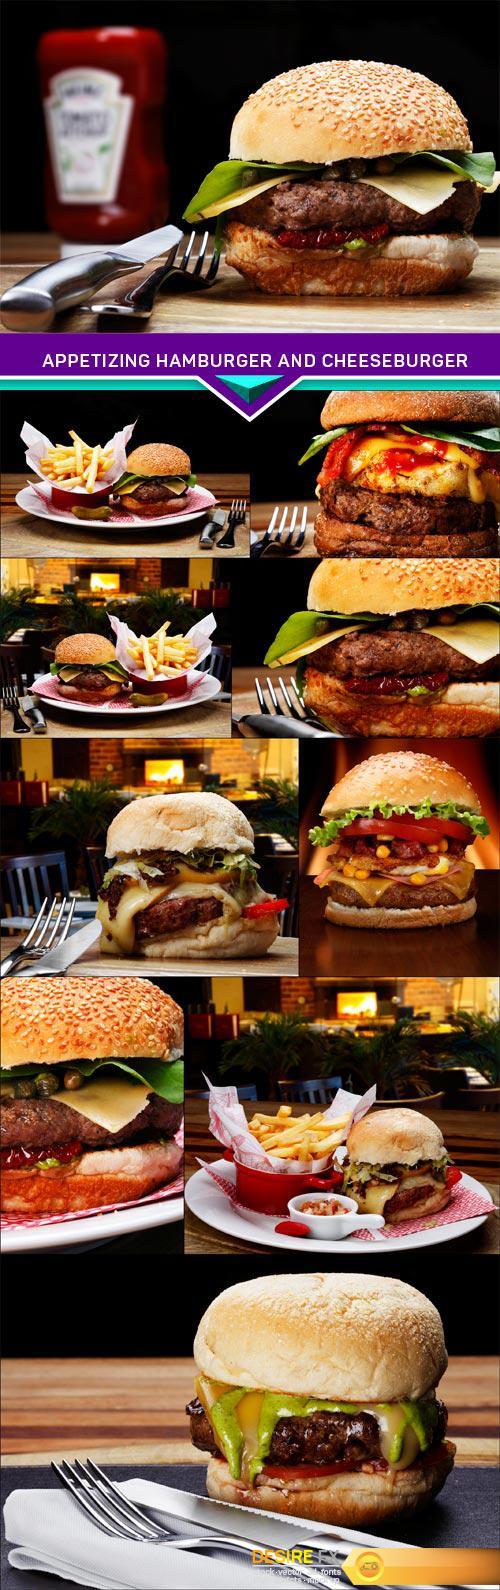 Appetizing hamburger and cheeseburger 10X JPEG